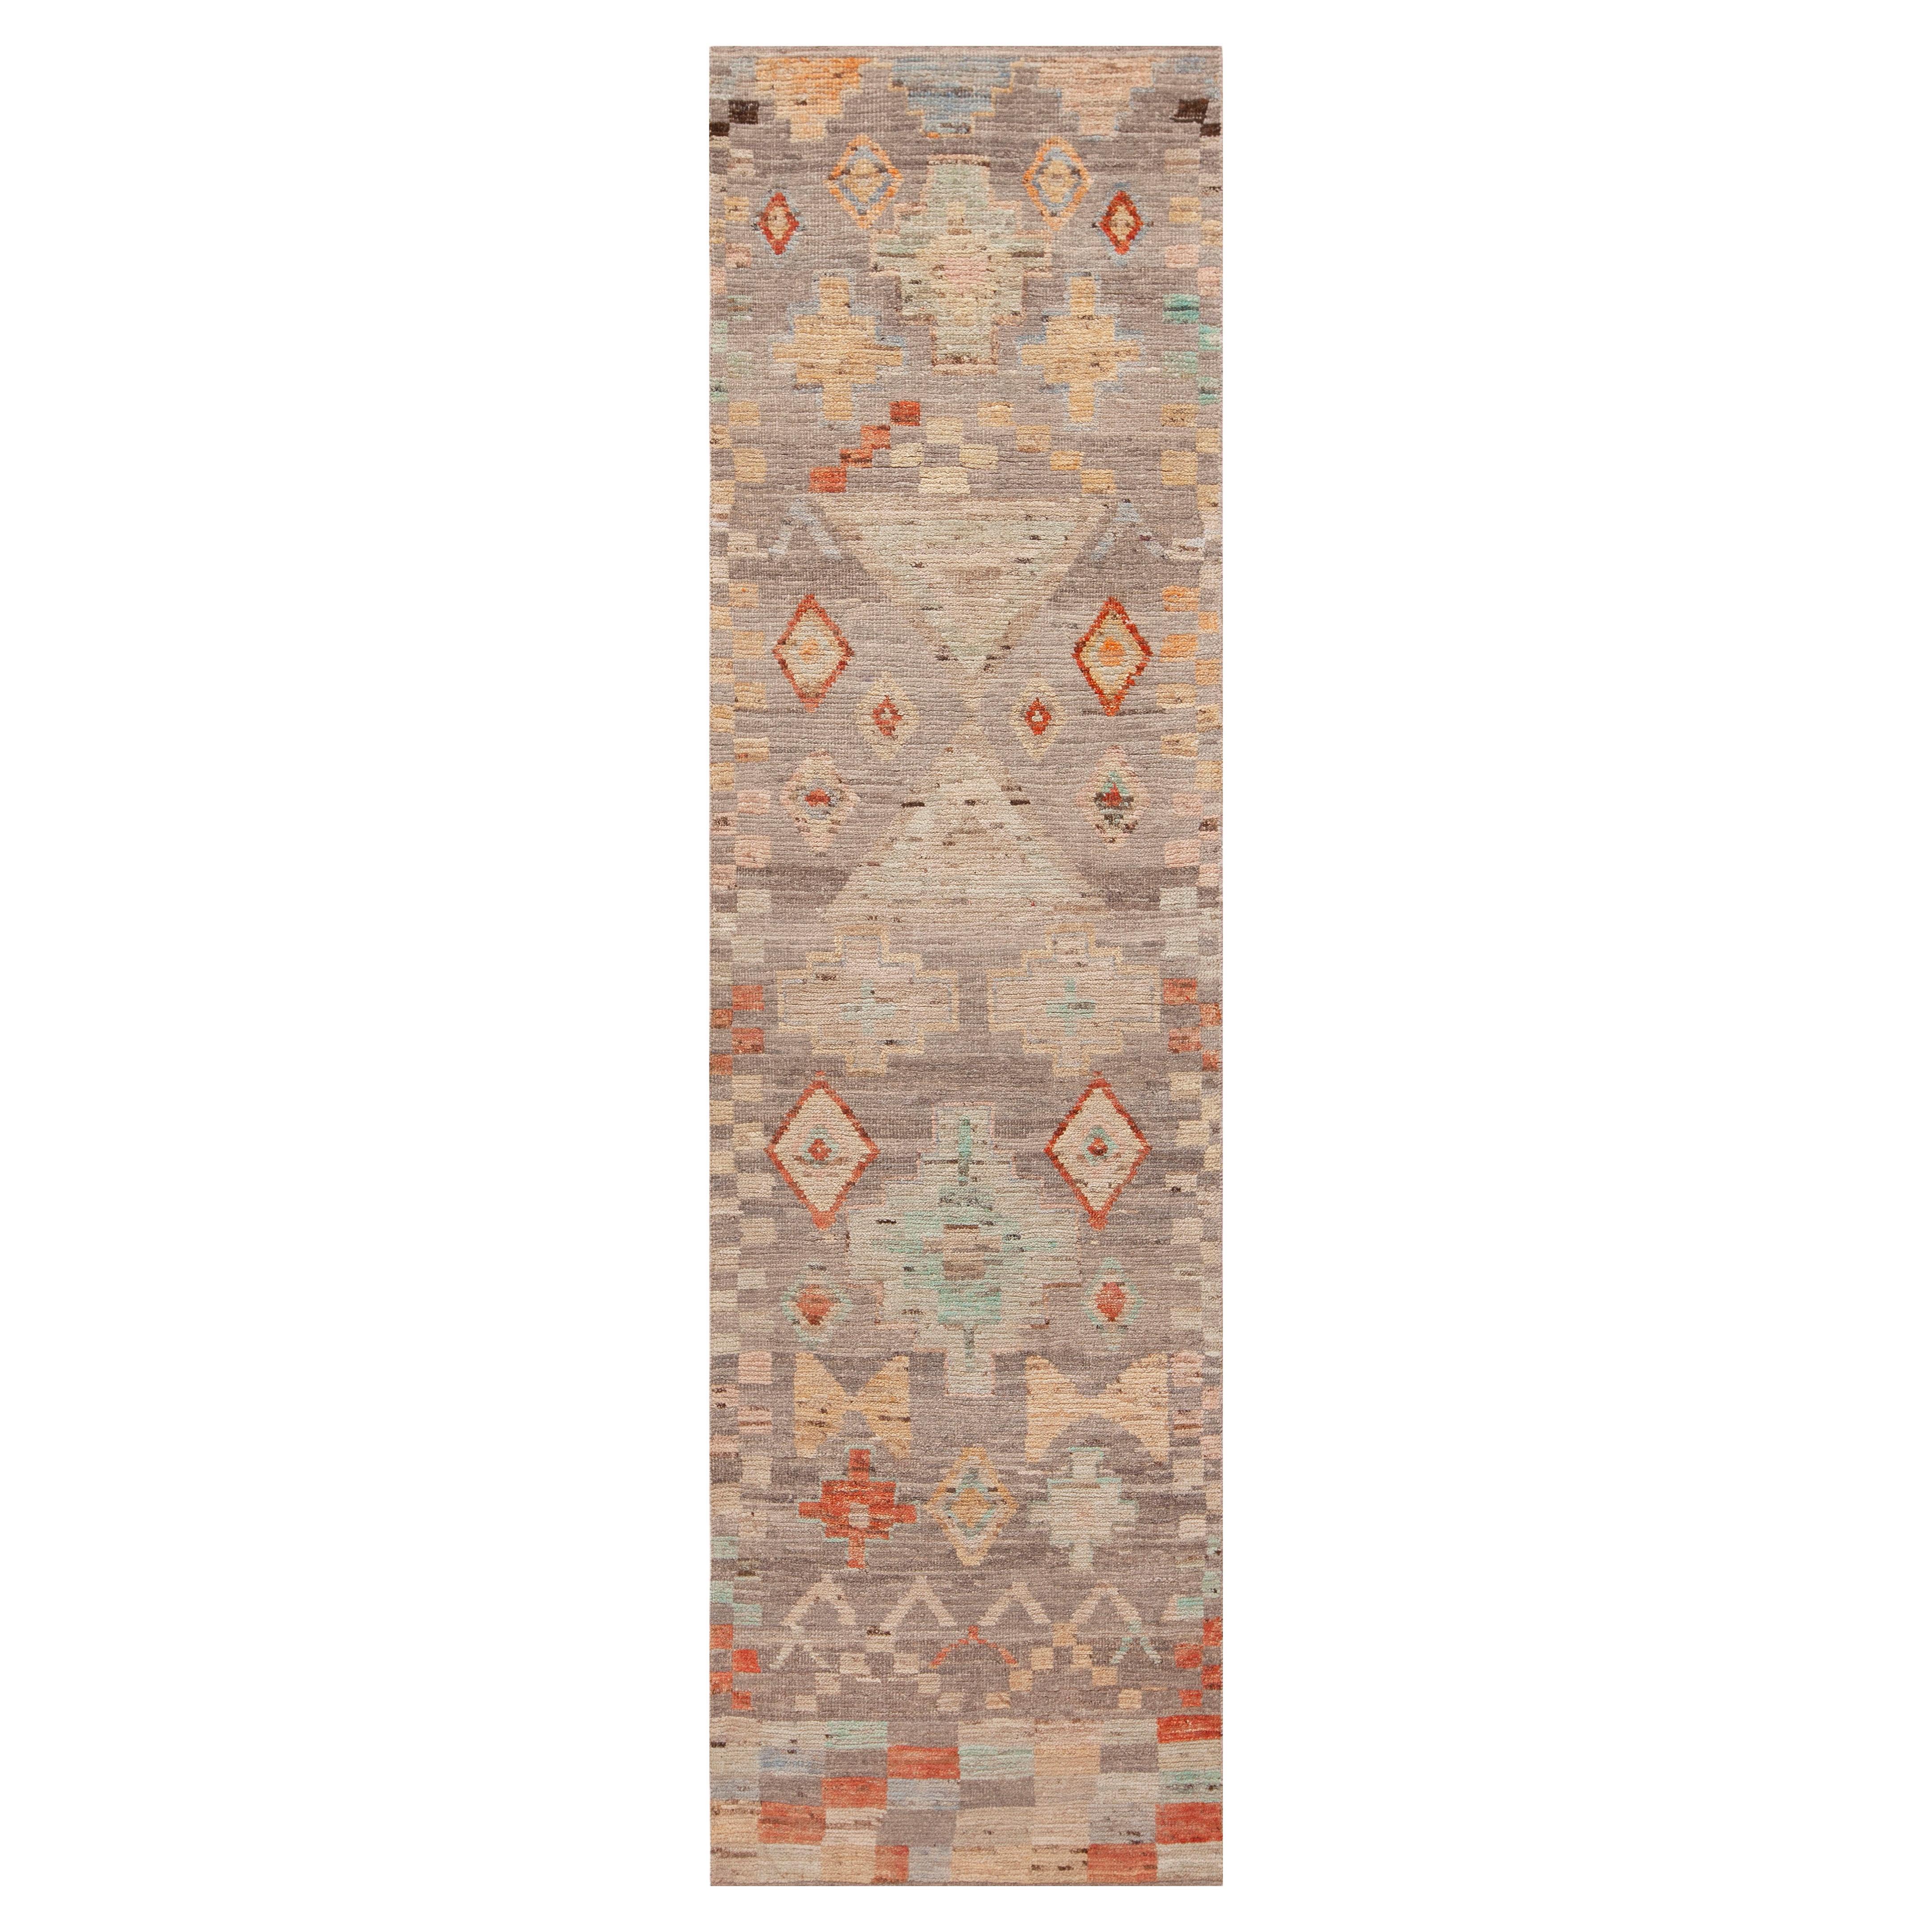 Nazmiyal Collection Rustic Tribal Design Hallway Runner Rug 2'8" x 9'7" For Sale